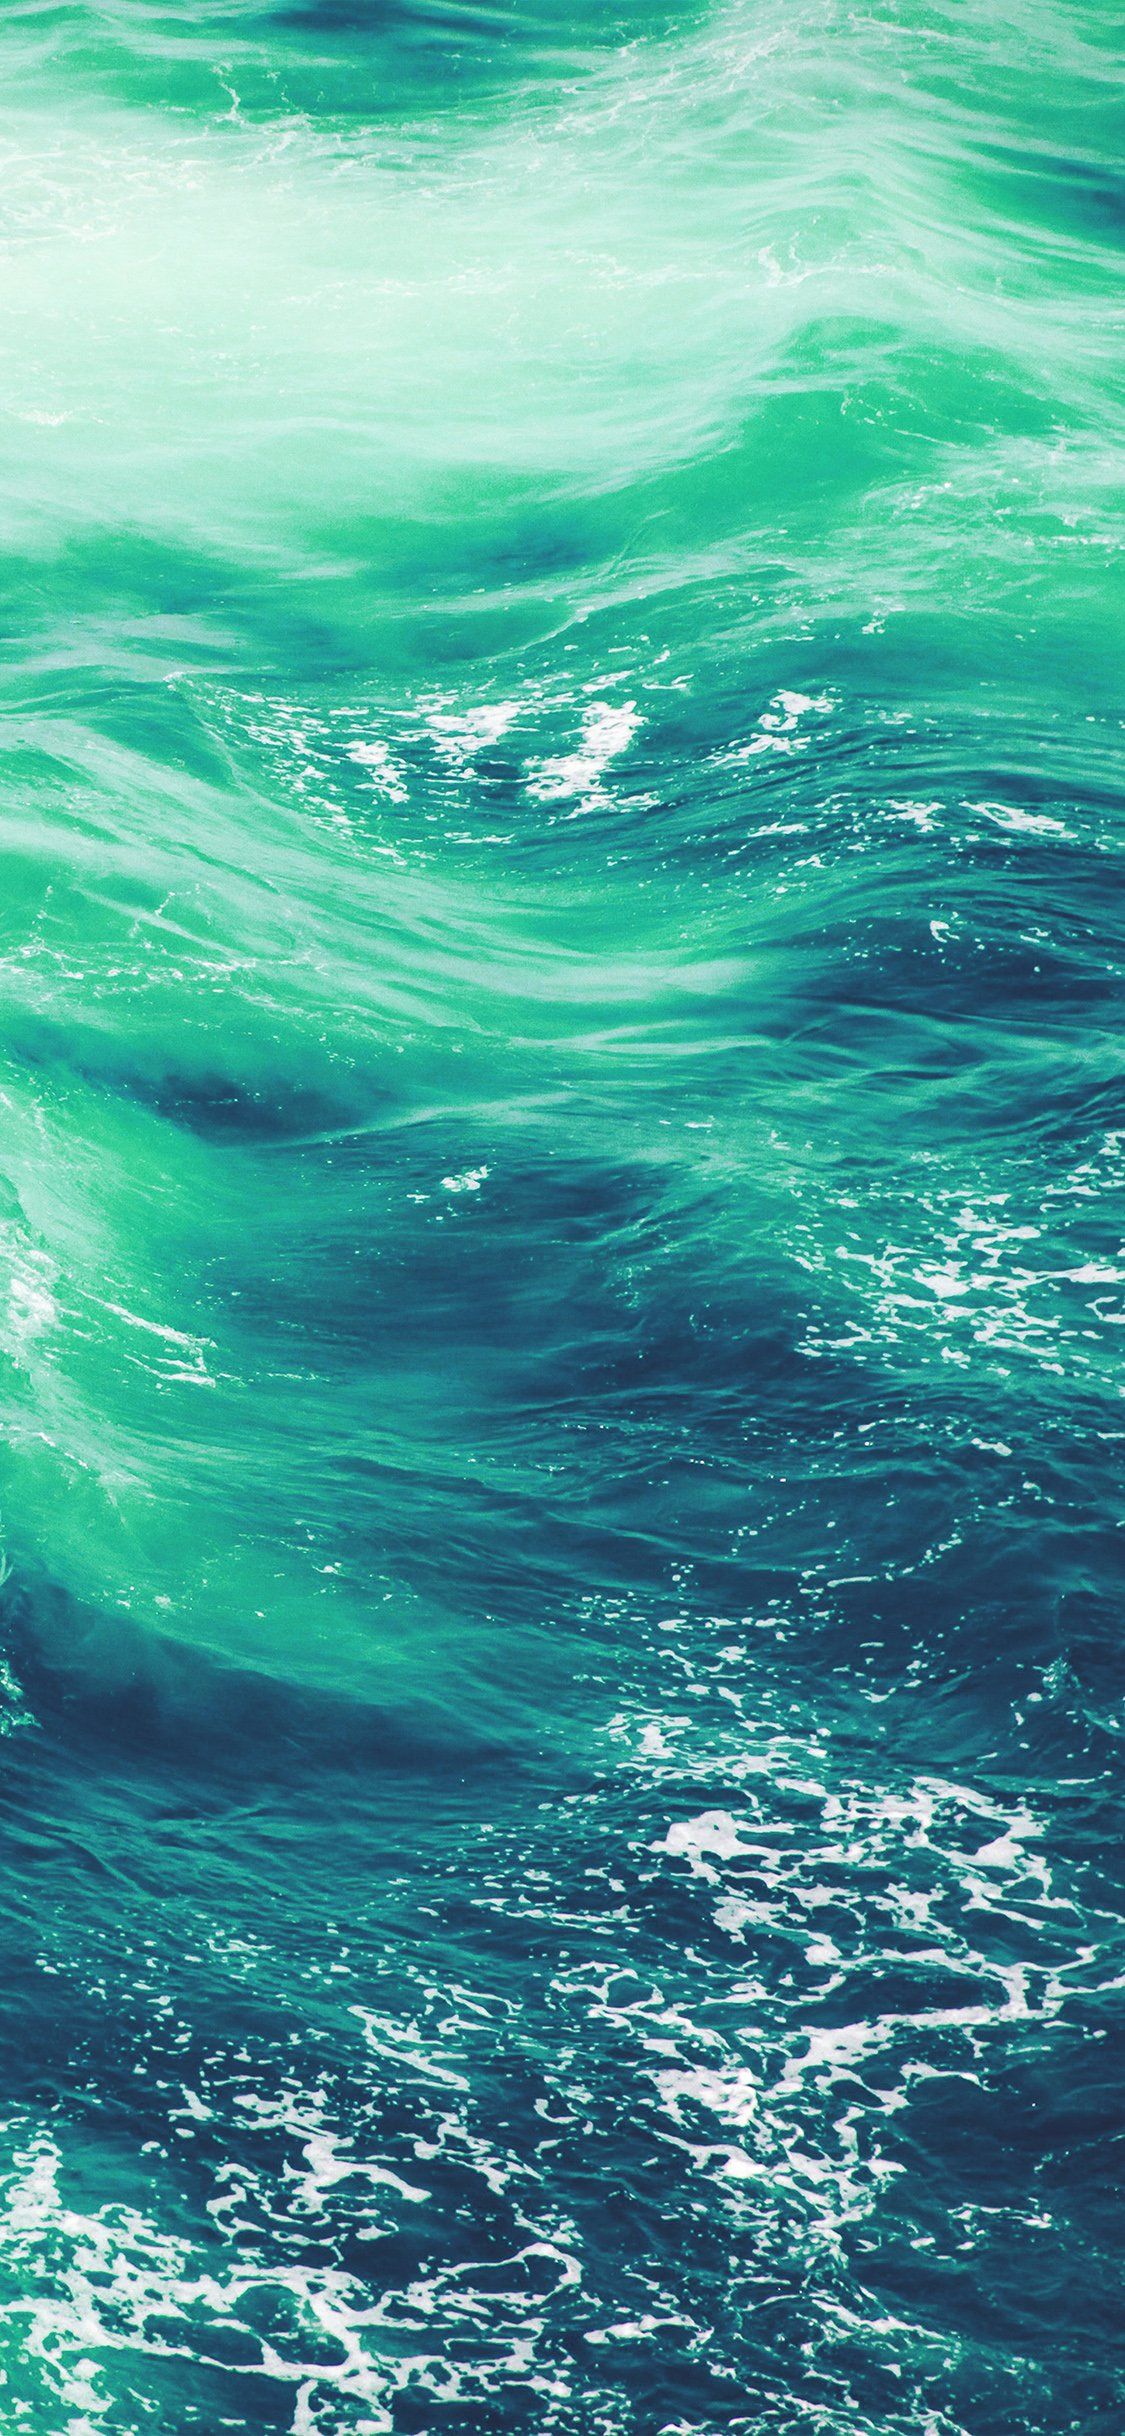 iPhone X wallpaper. wave nature water blue green sea ocean pattern